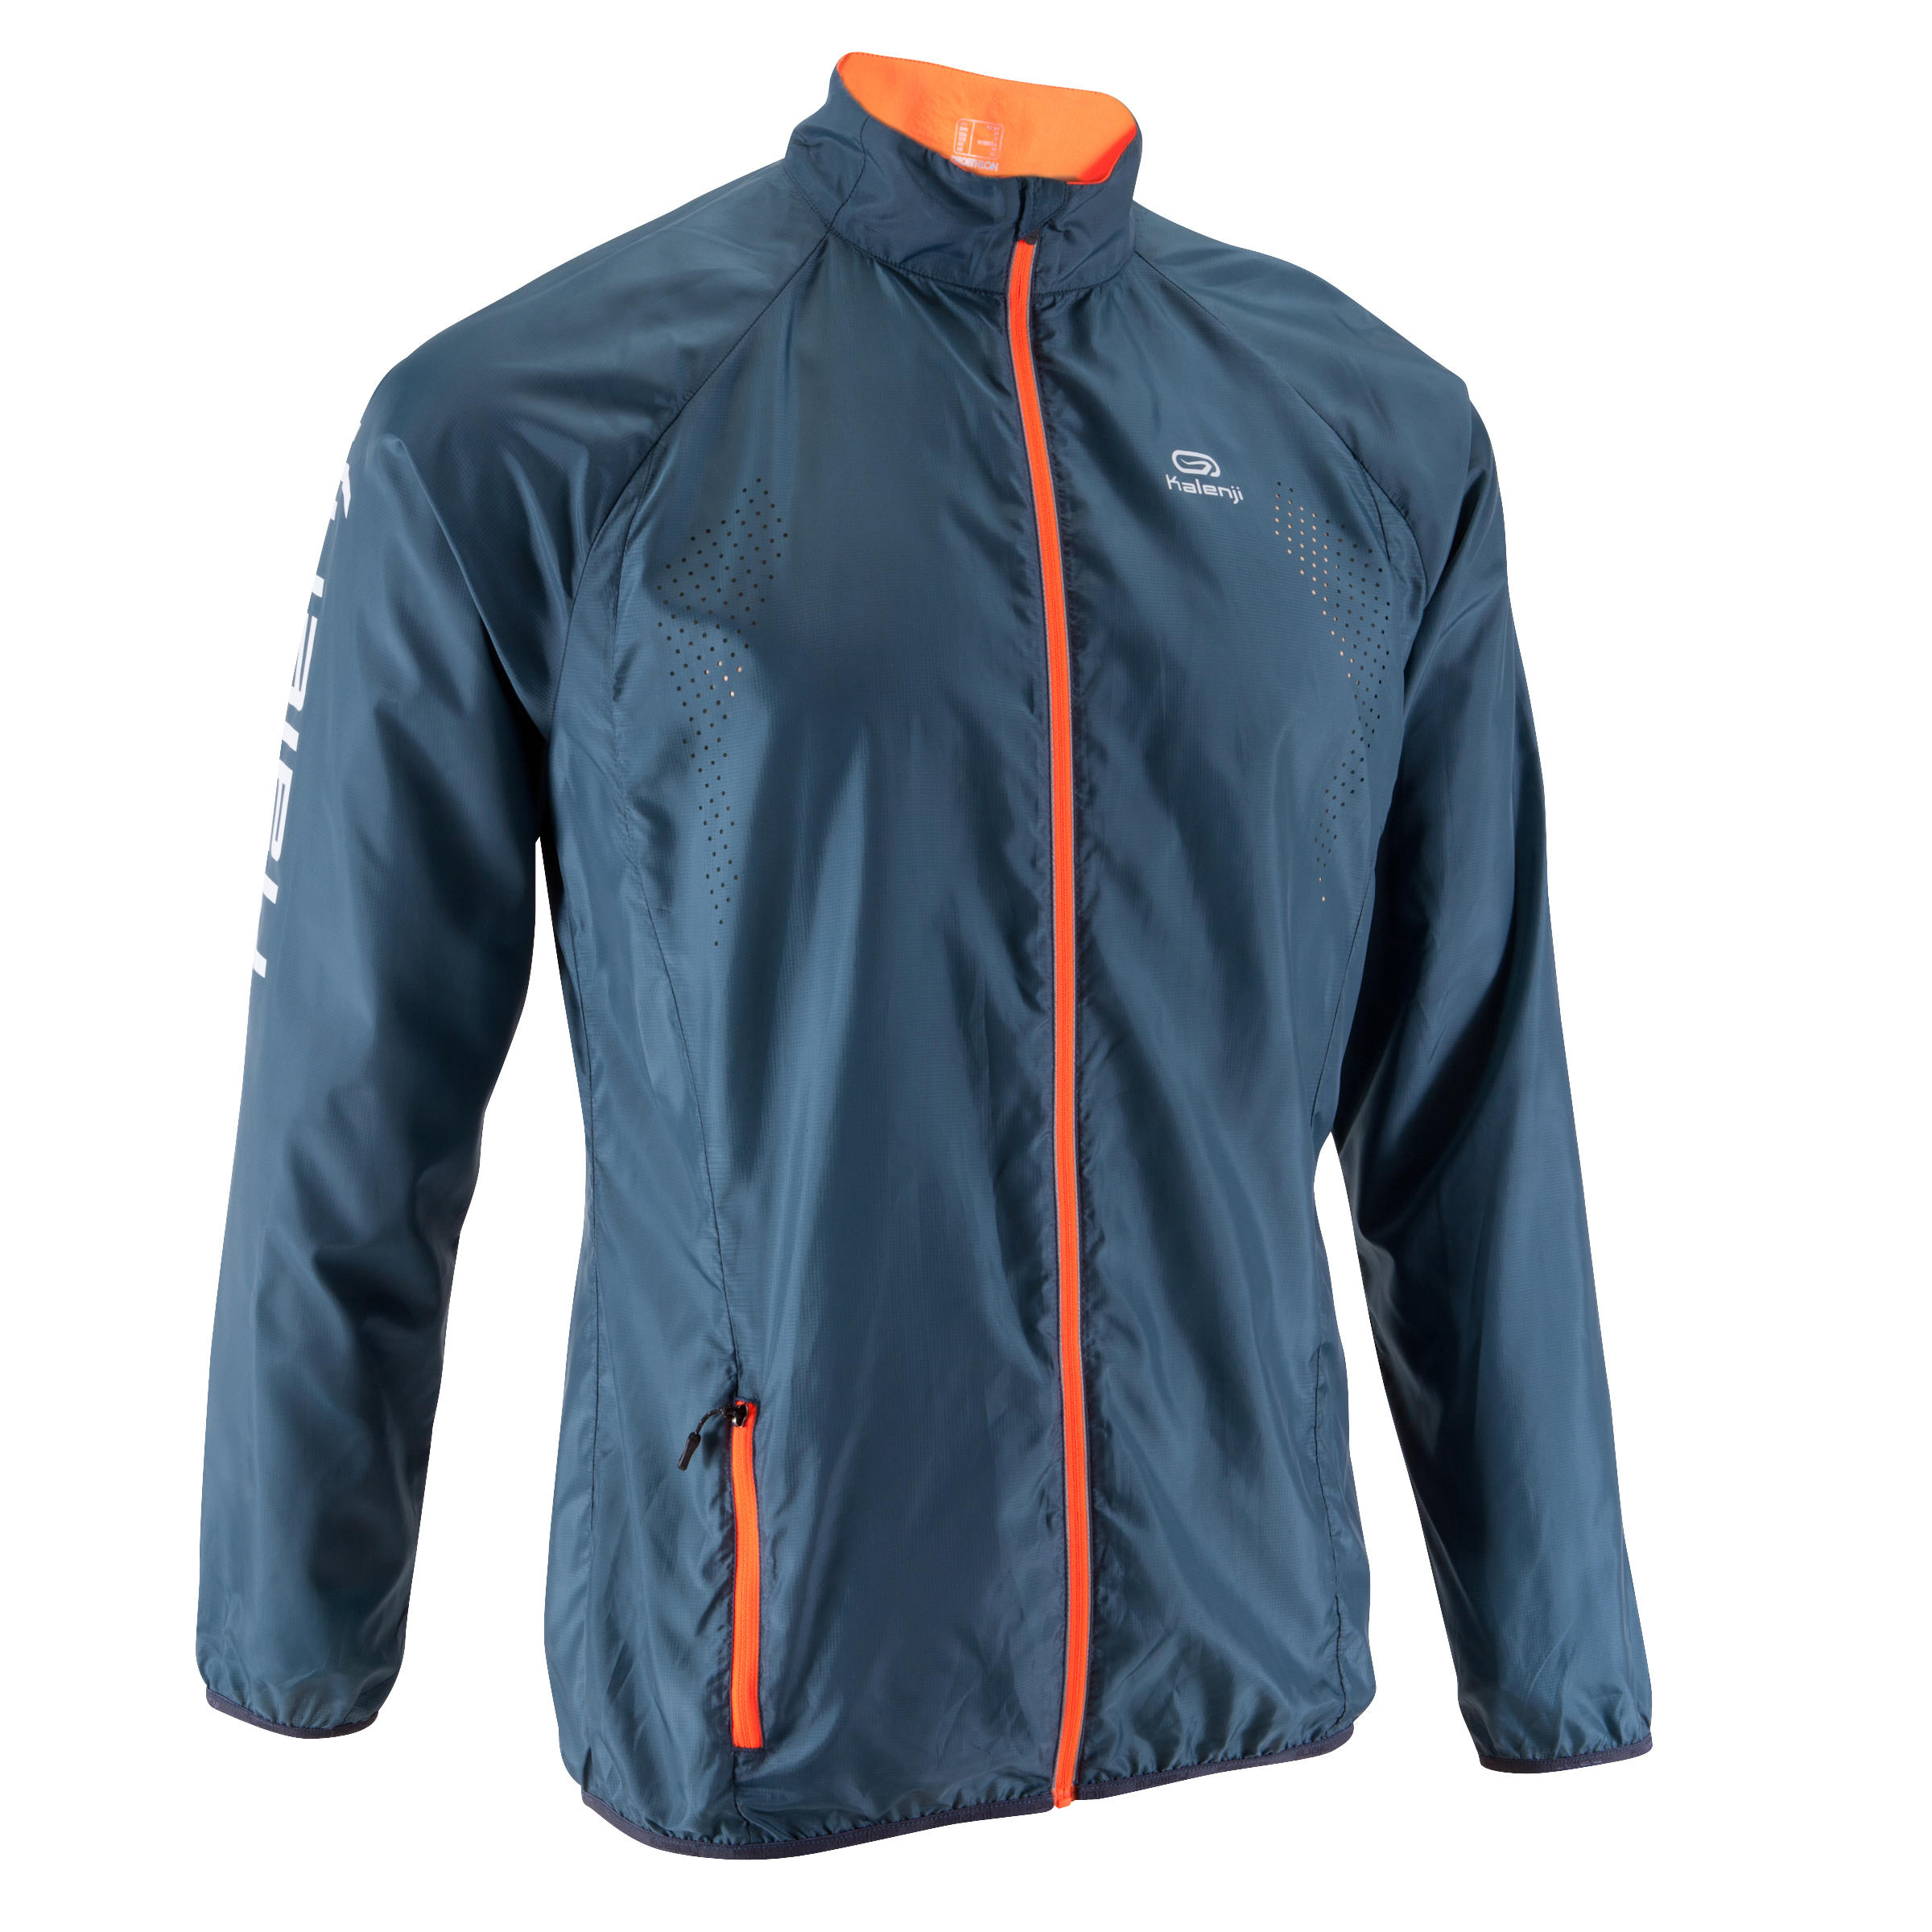 KALENJI Men's Trail Running Windproof Jacket - Grey/Orange